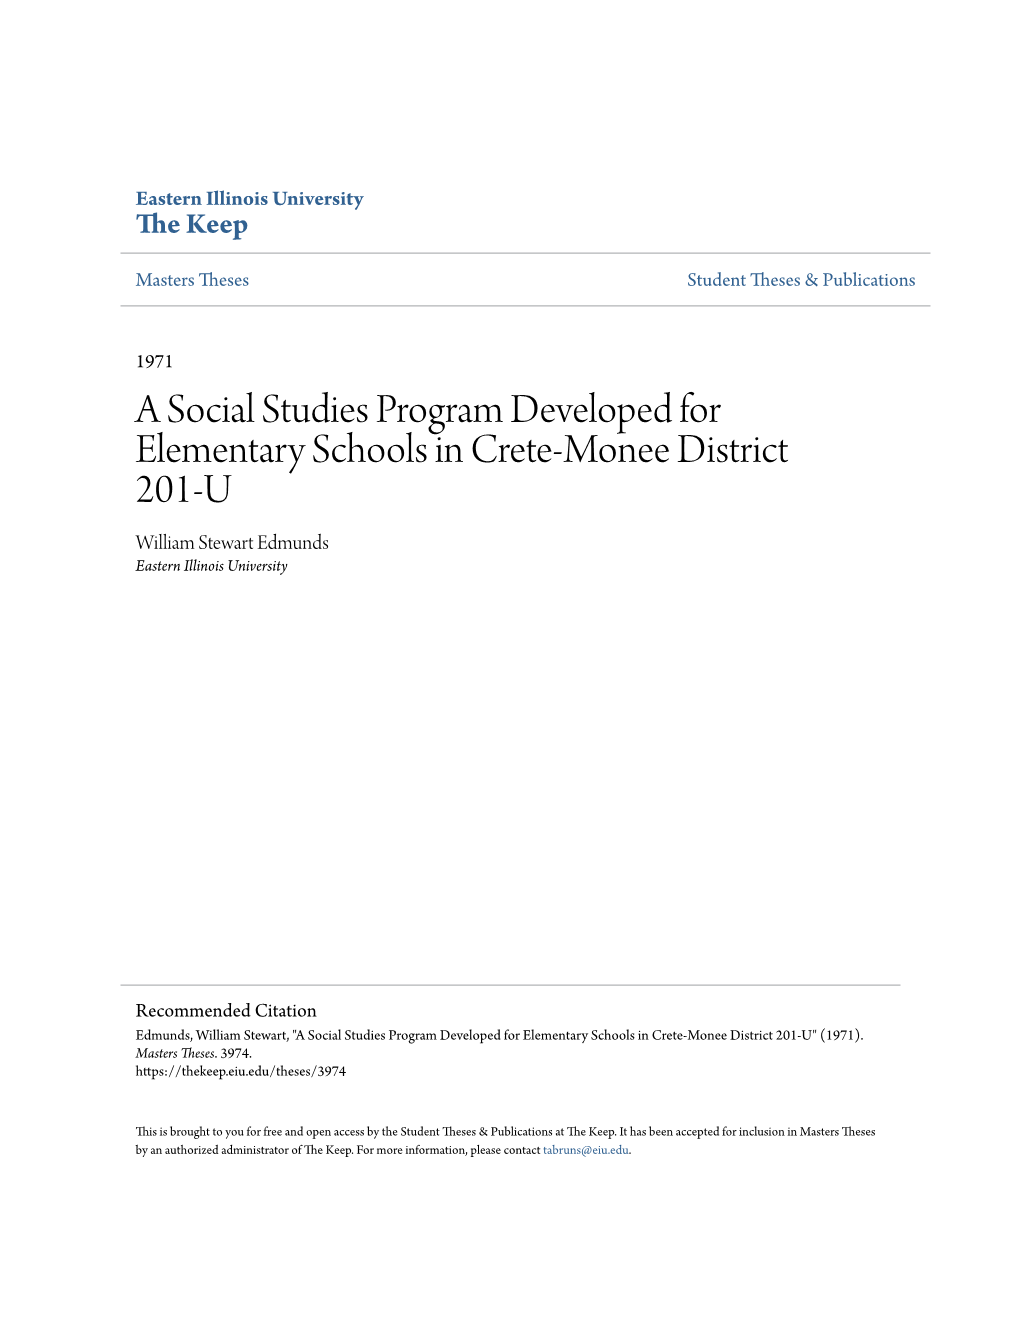 A Social Studies Program Developed for Elementary Schools in Crete-Monee District 201-U William Stewart Edmunds Eastern Illinois University